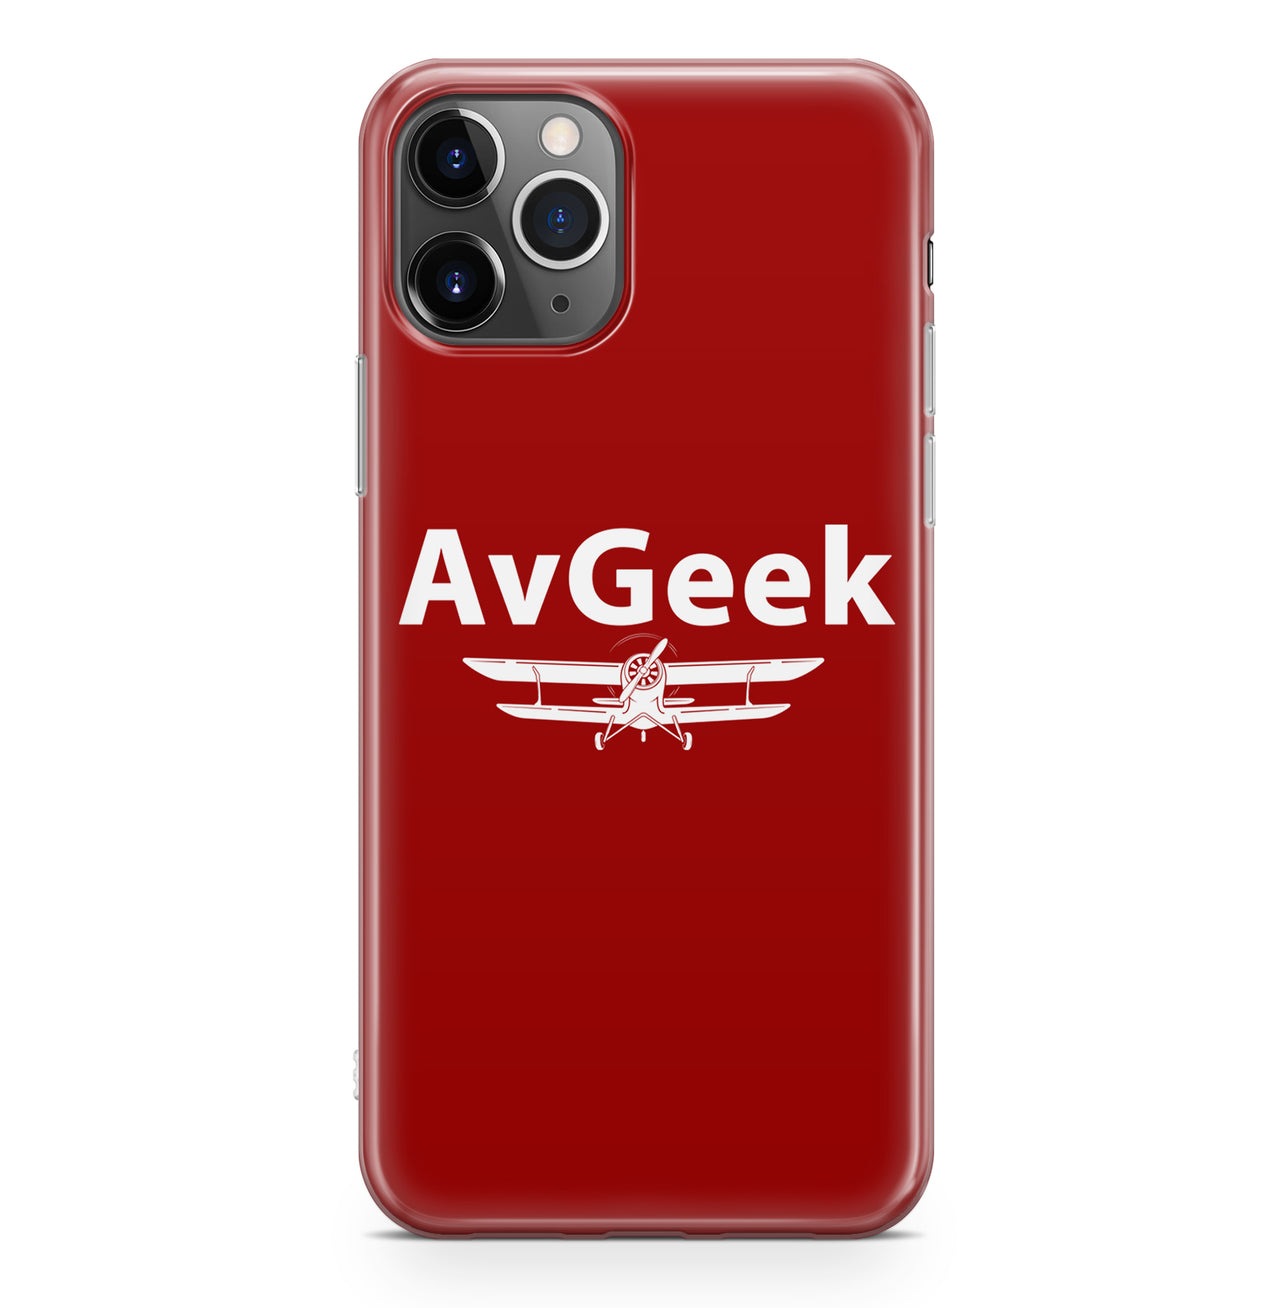 Avgeek Designed iPhone Cases